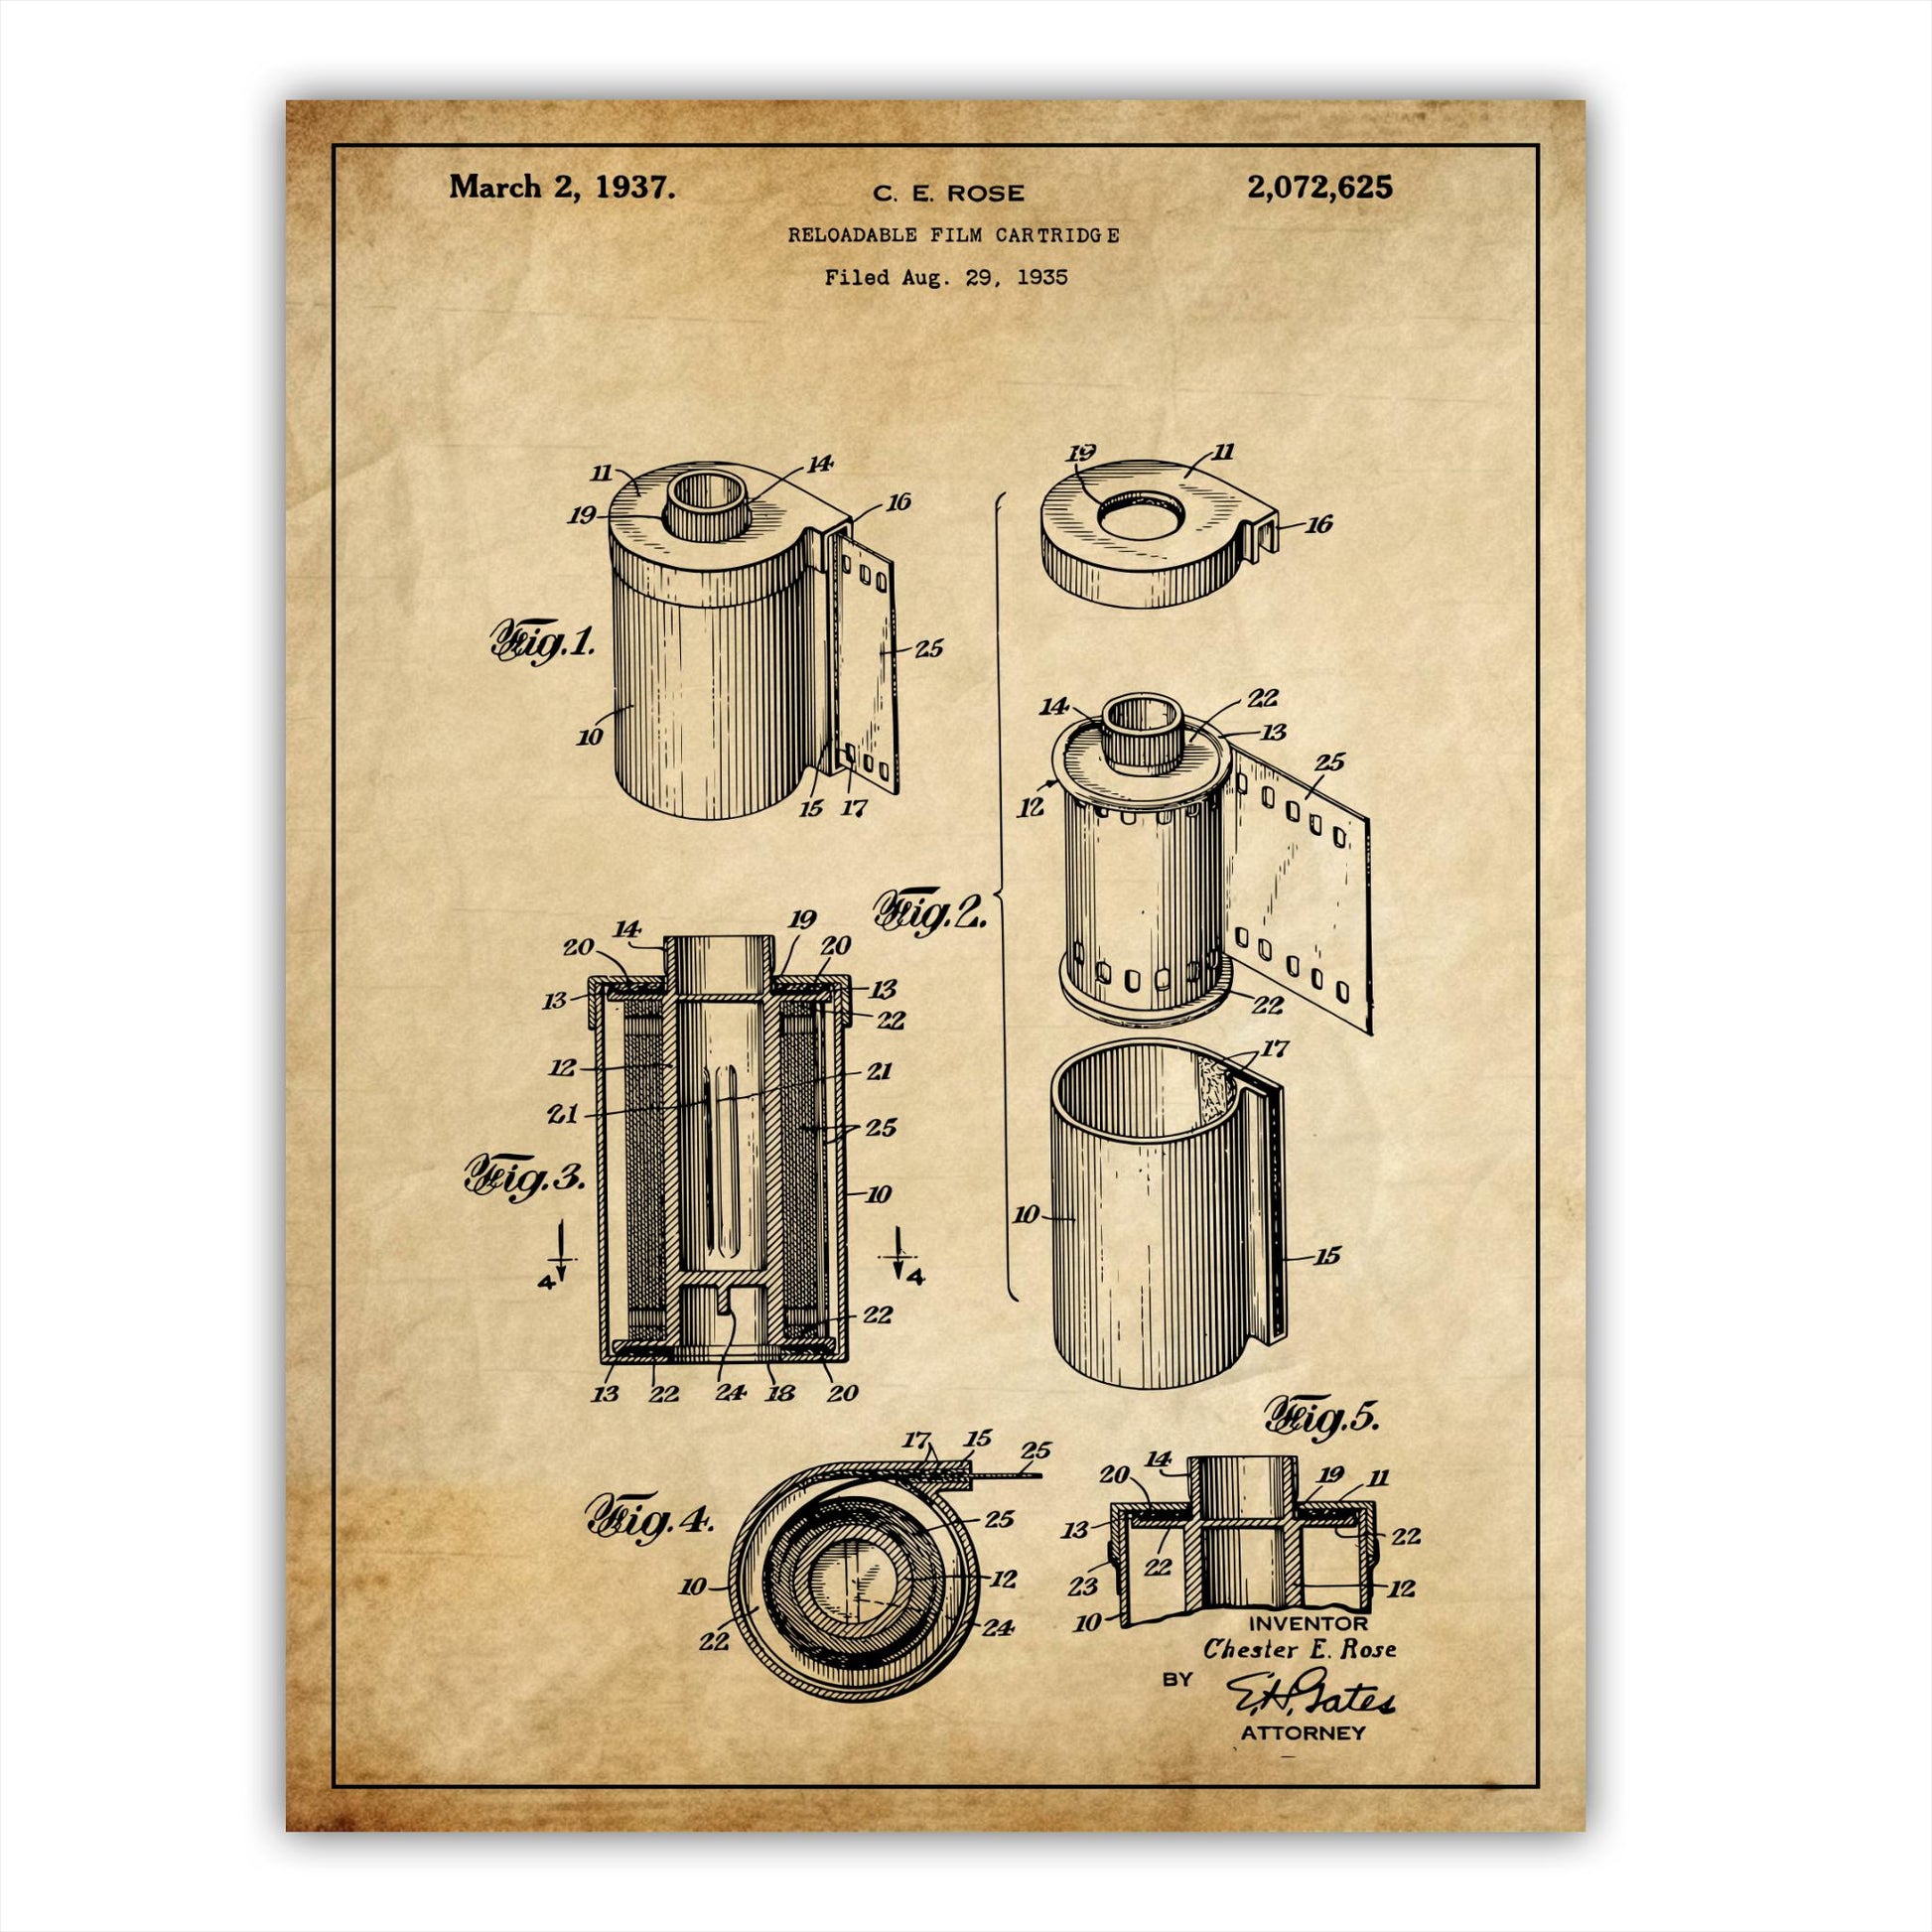 Patent 2072625 - Reloadable Film Catridge - 1937 - Atka Inspirations